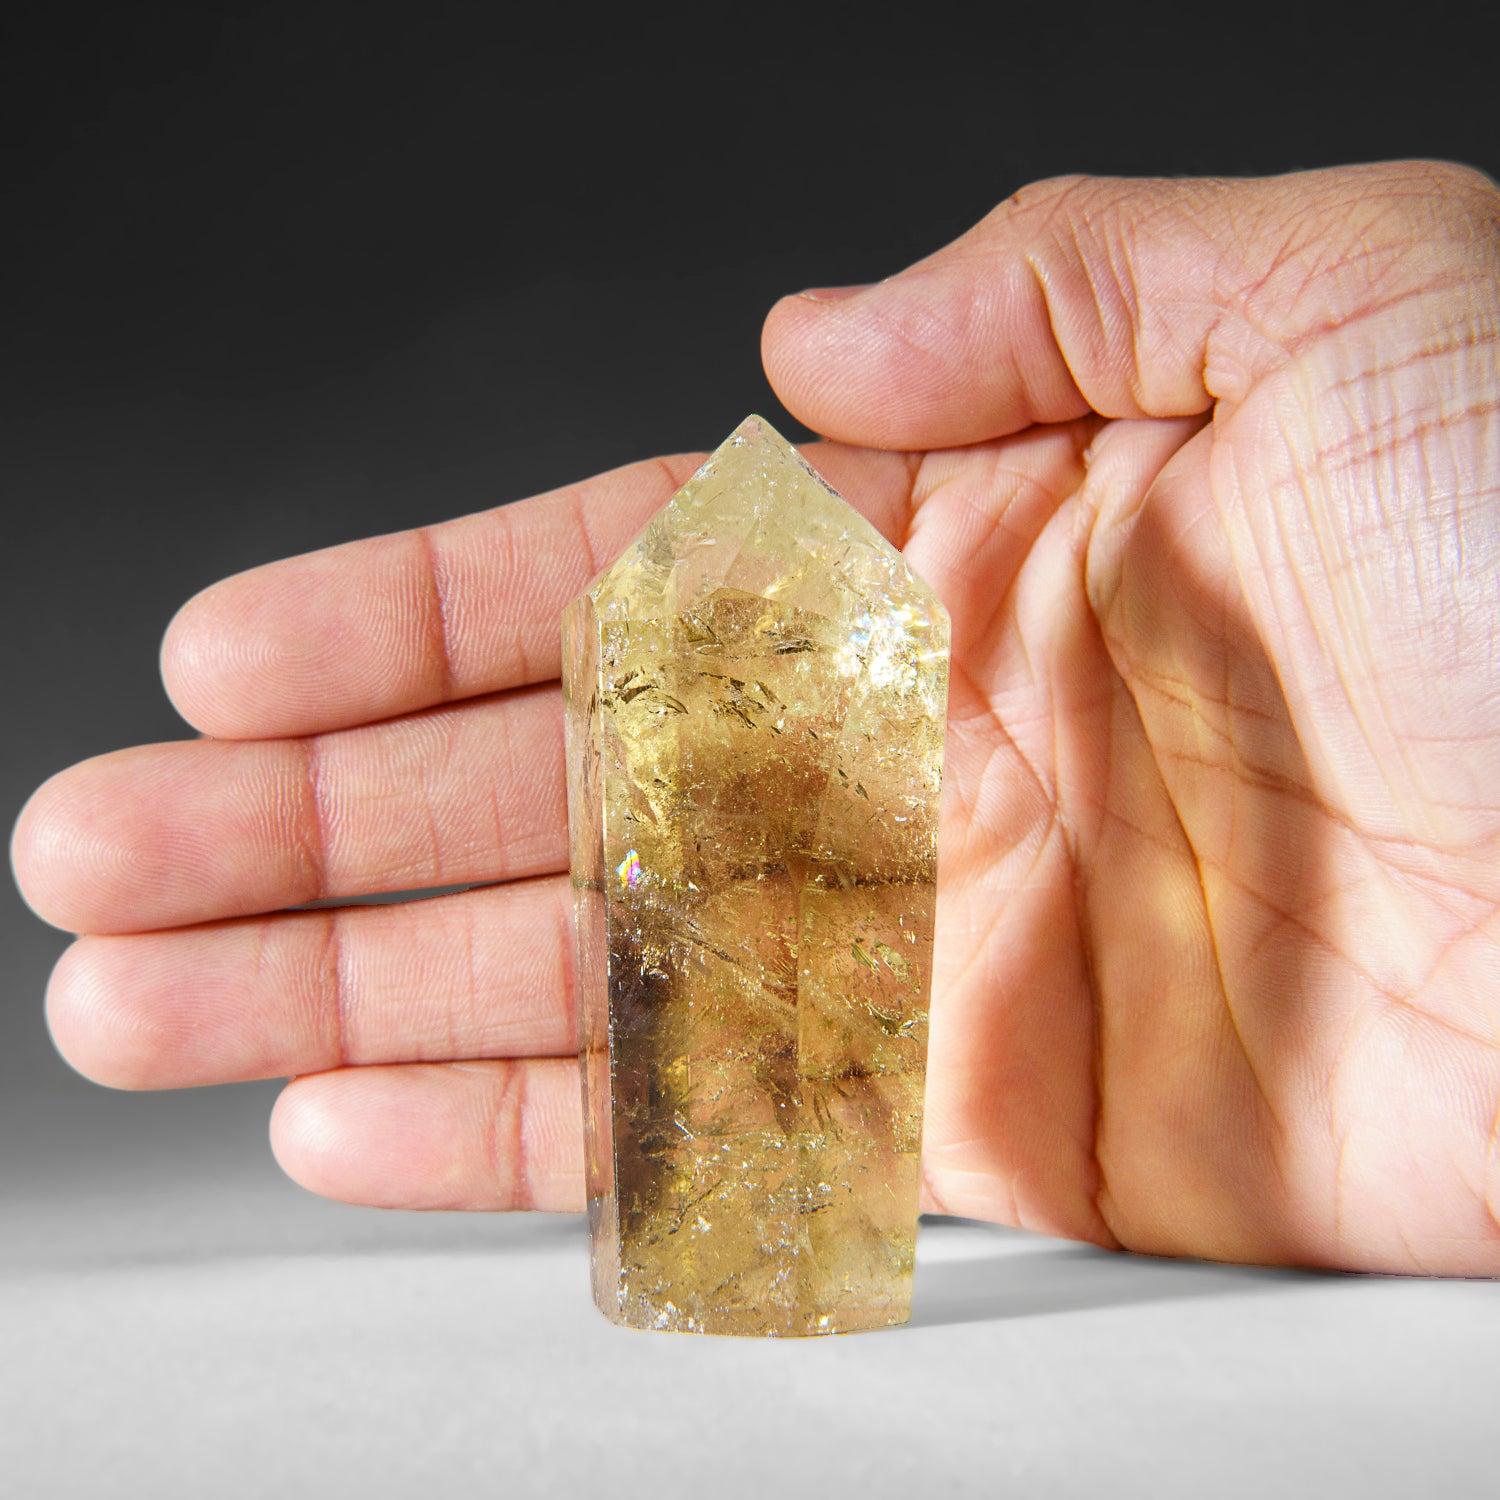 Genuine Citrine Crystal Point from Brazil (131 grams)